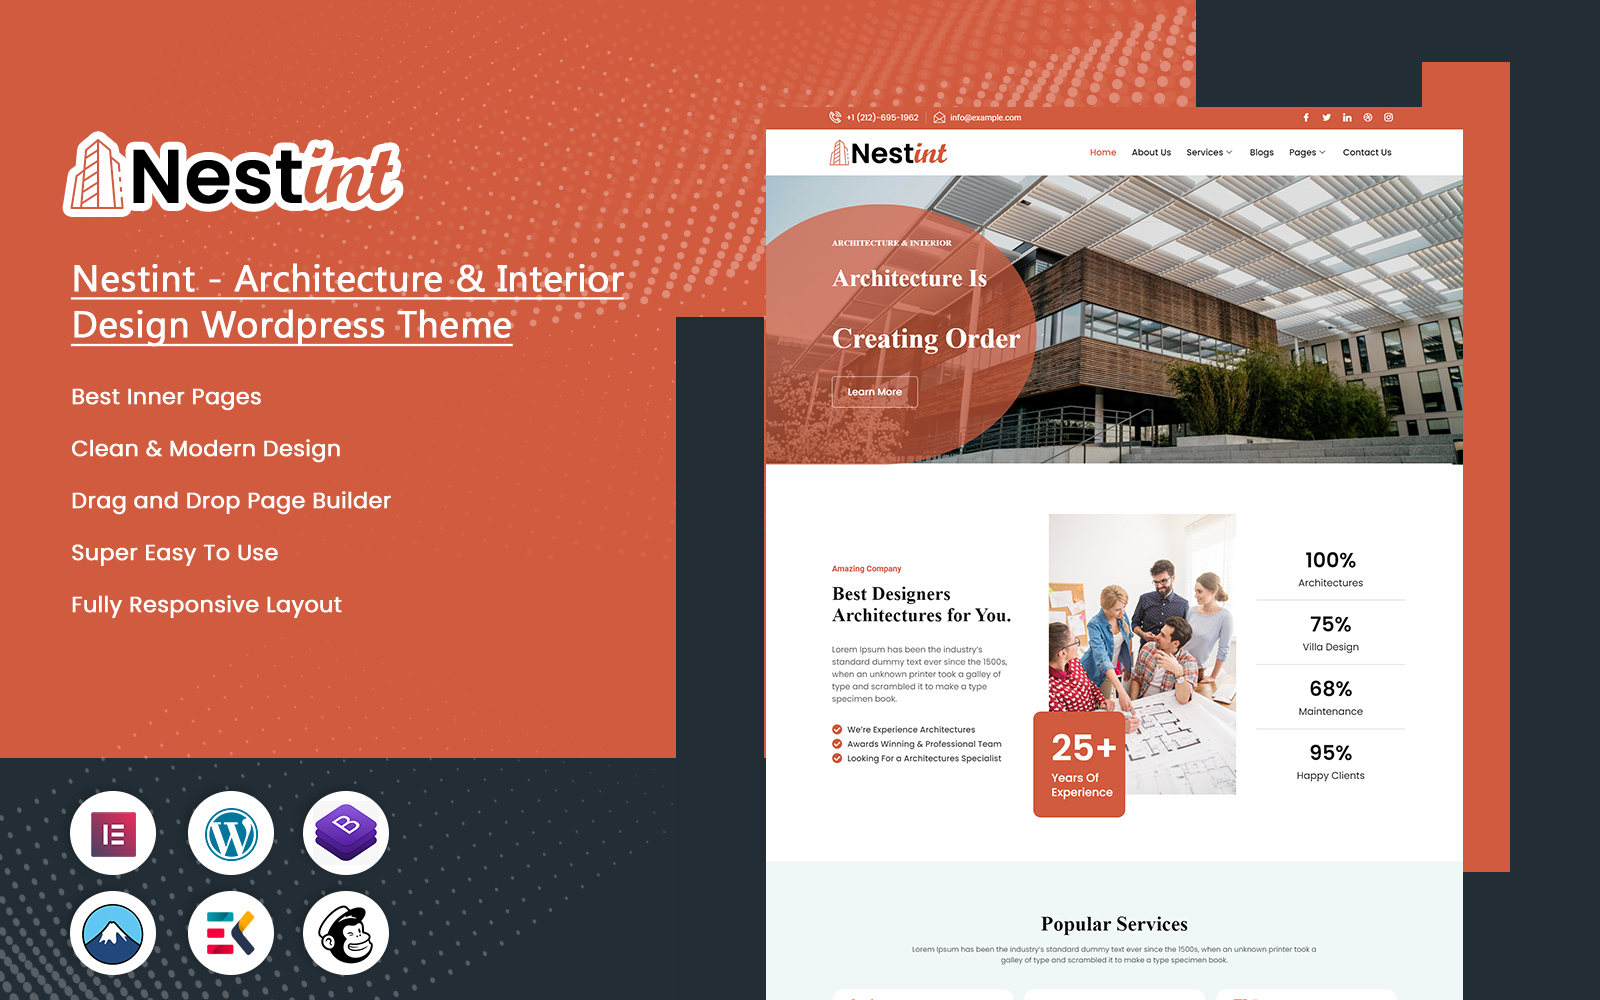 Nestint - Architecture & Interior Design Wordpress Theme